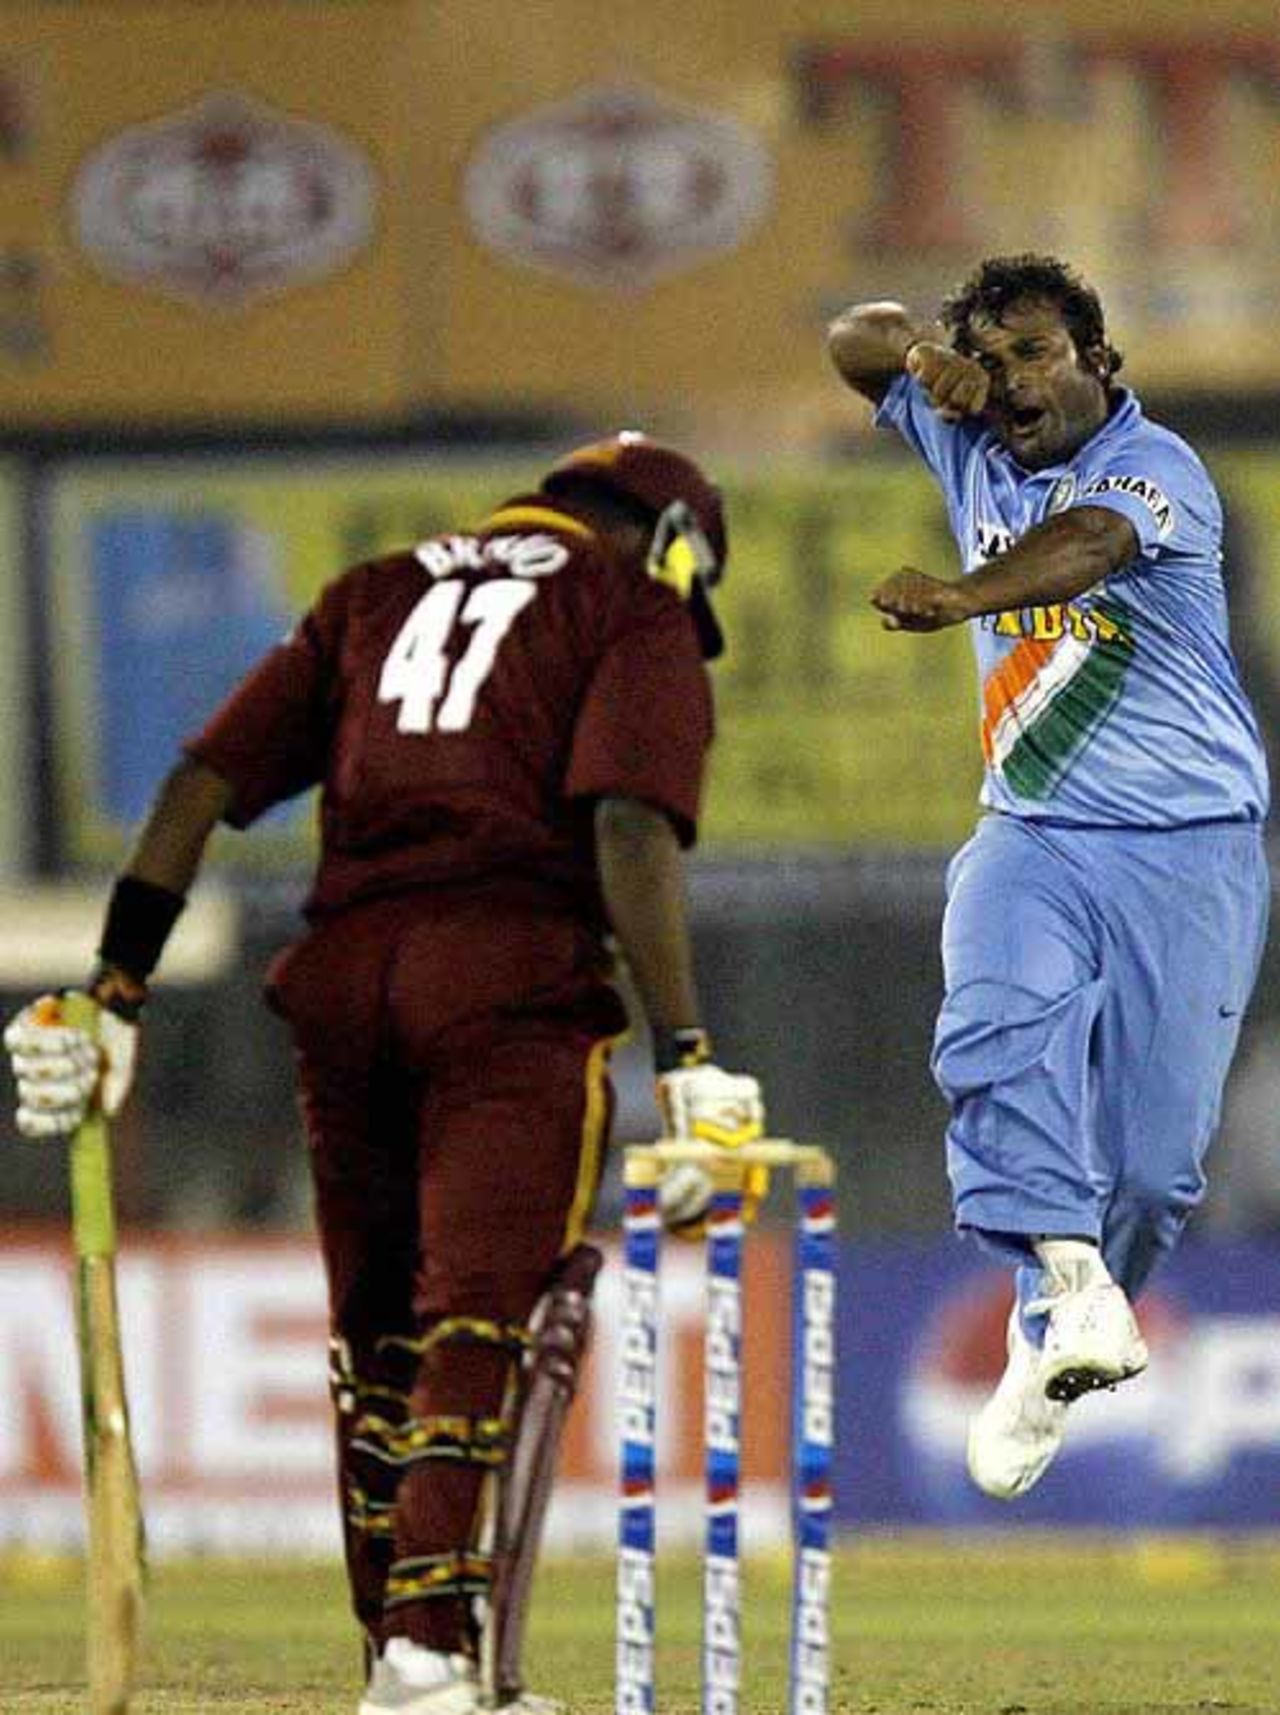 Ramesh Powar is ecstatic after dismissing Dwayne Bravo, India v West Indies, 2nd ODI, Cuttack, January 24, 2007